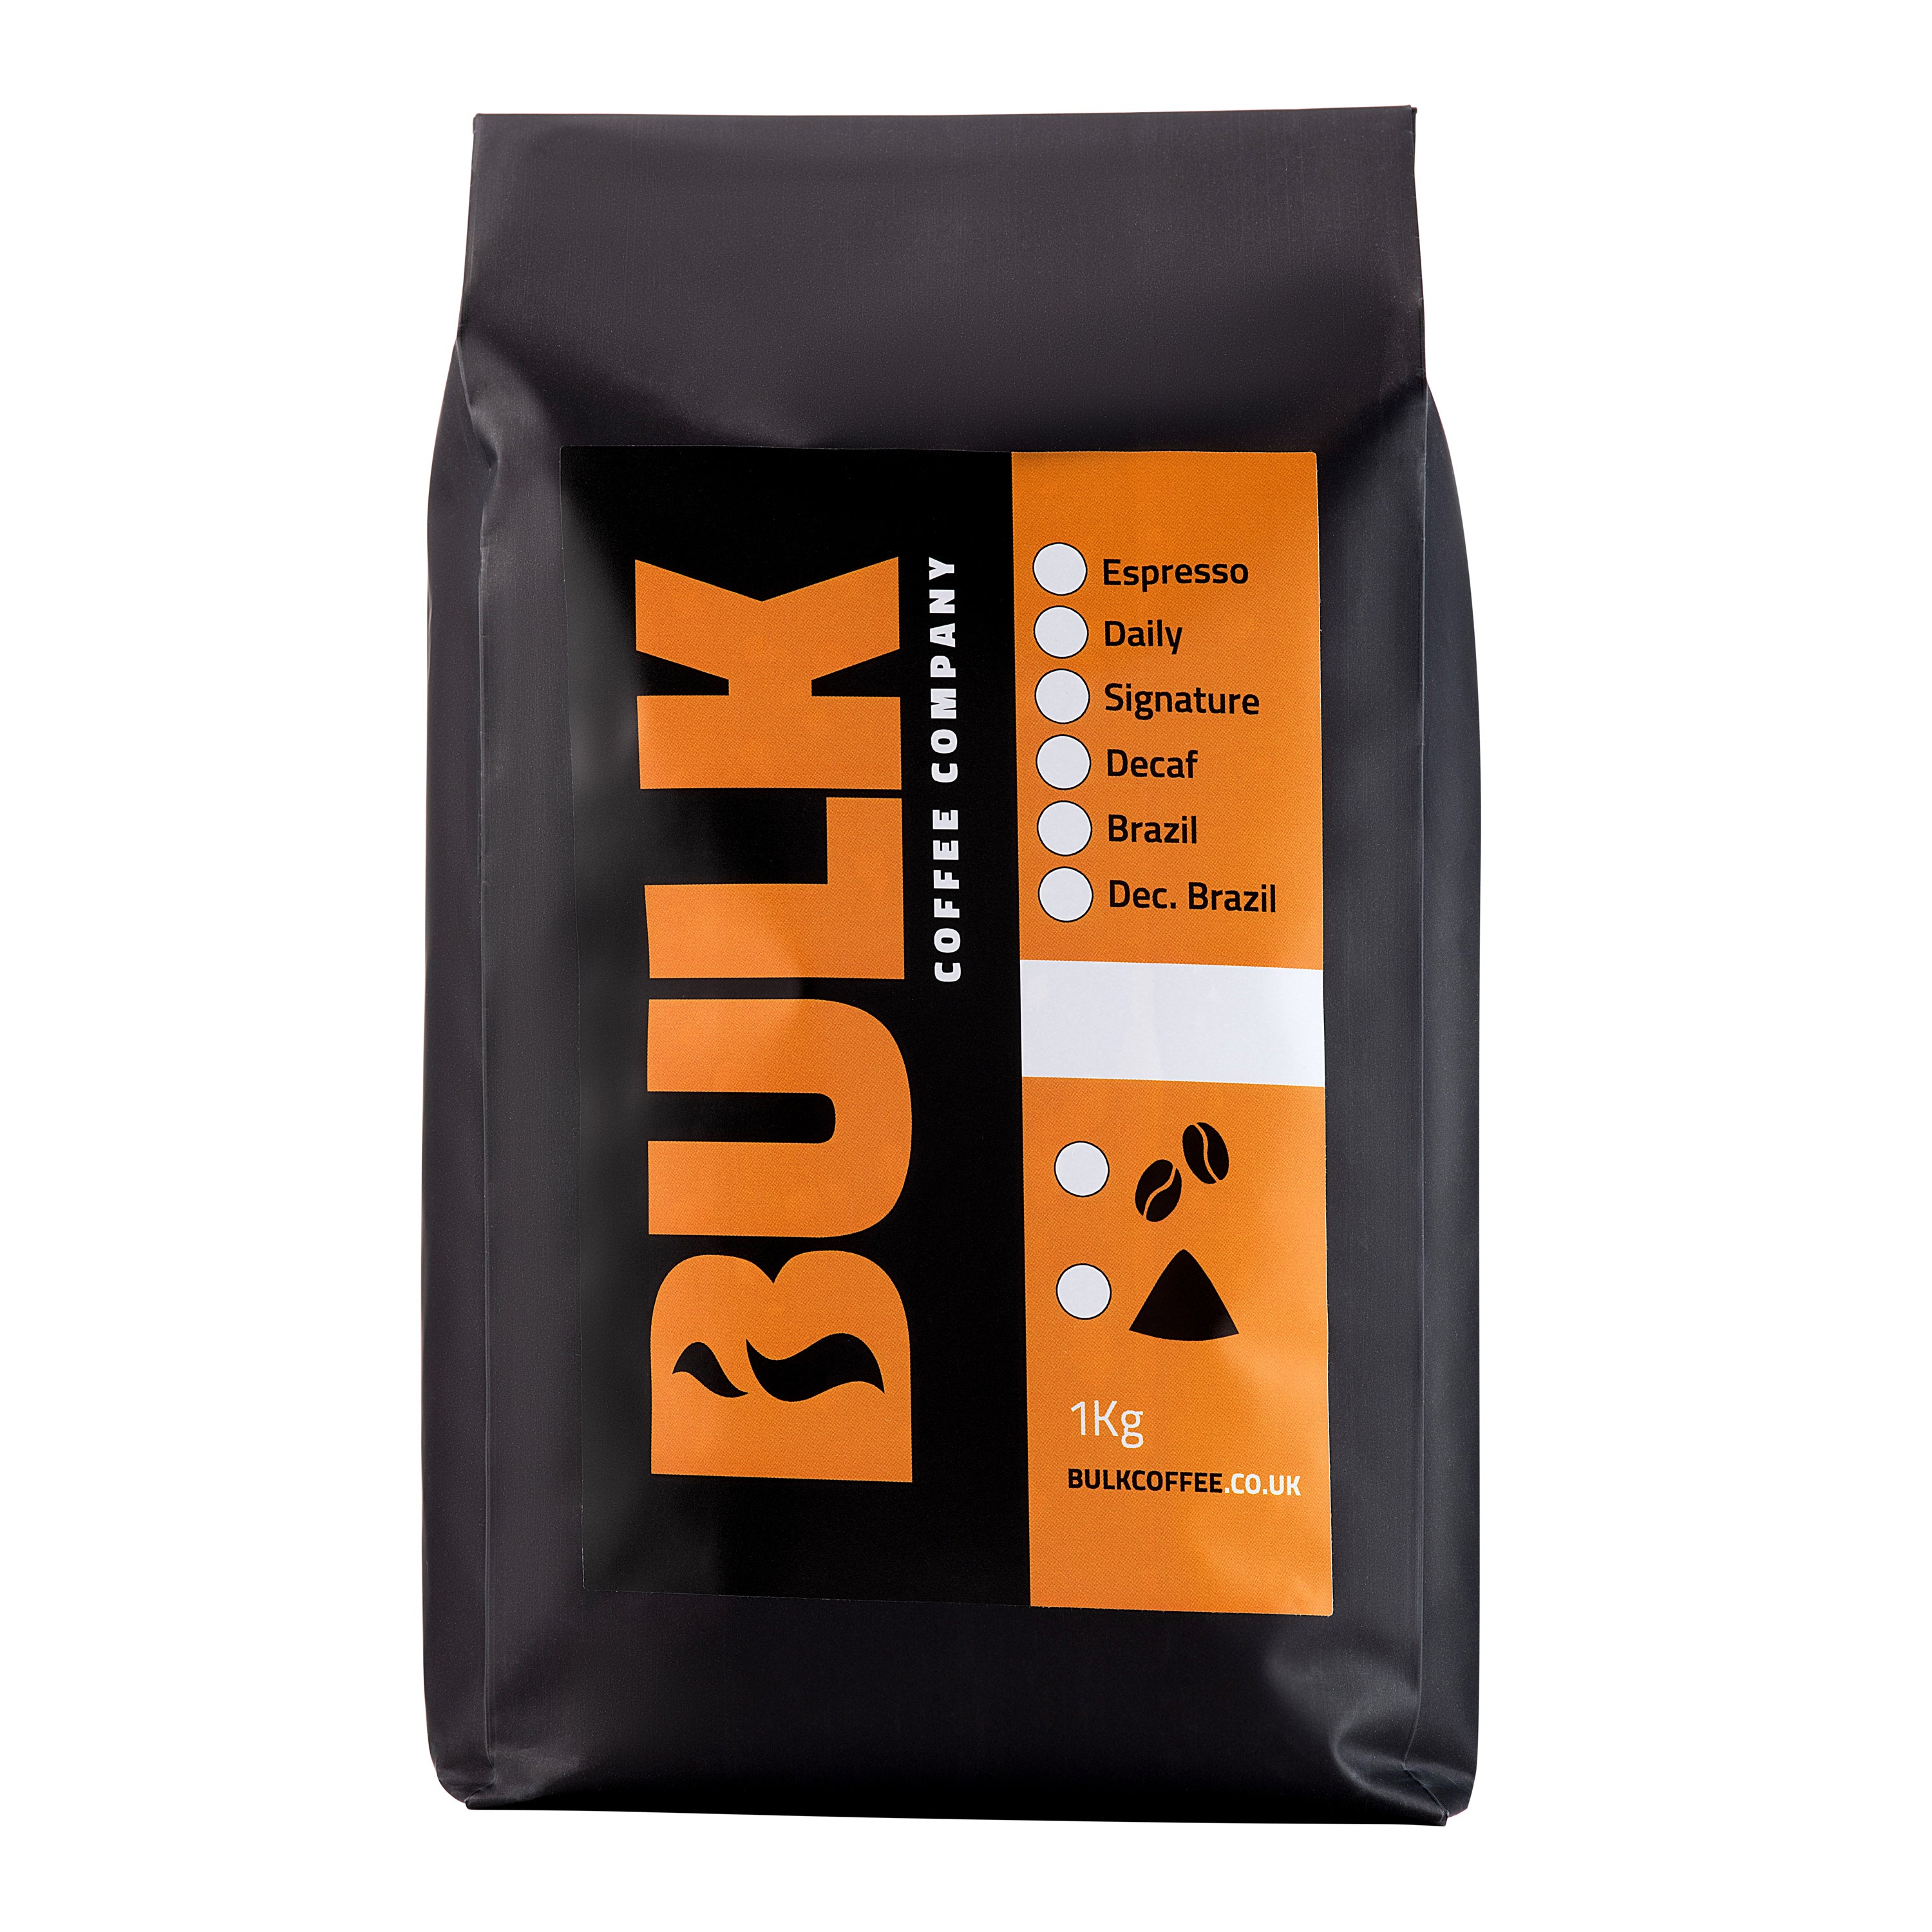 Bulk Coffee 1kg Bag